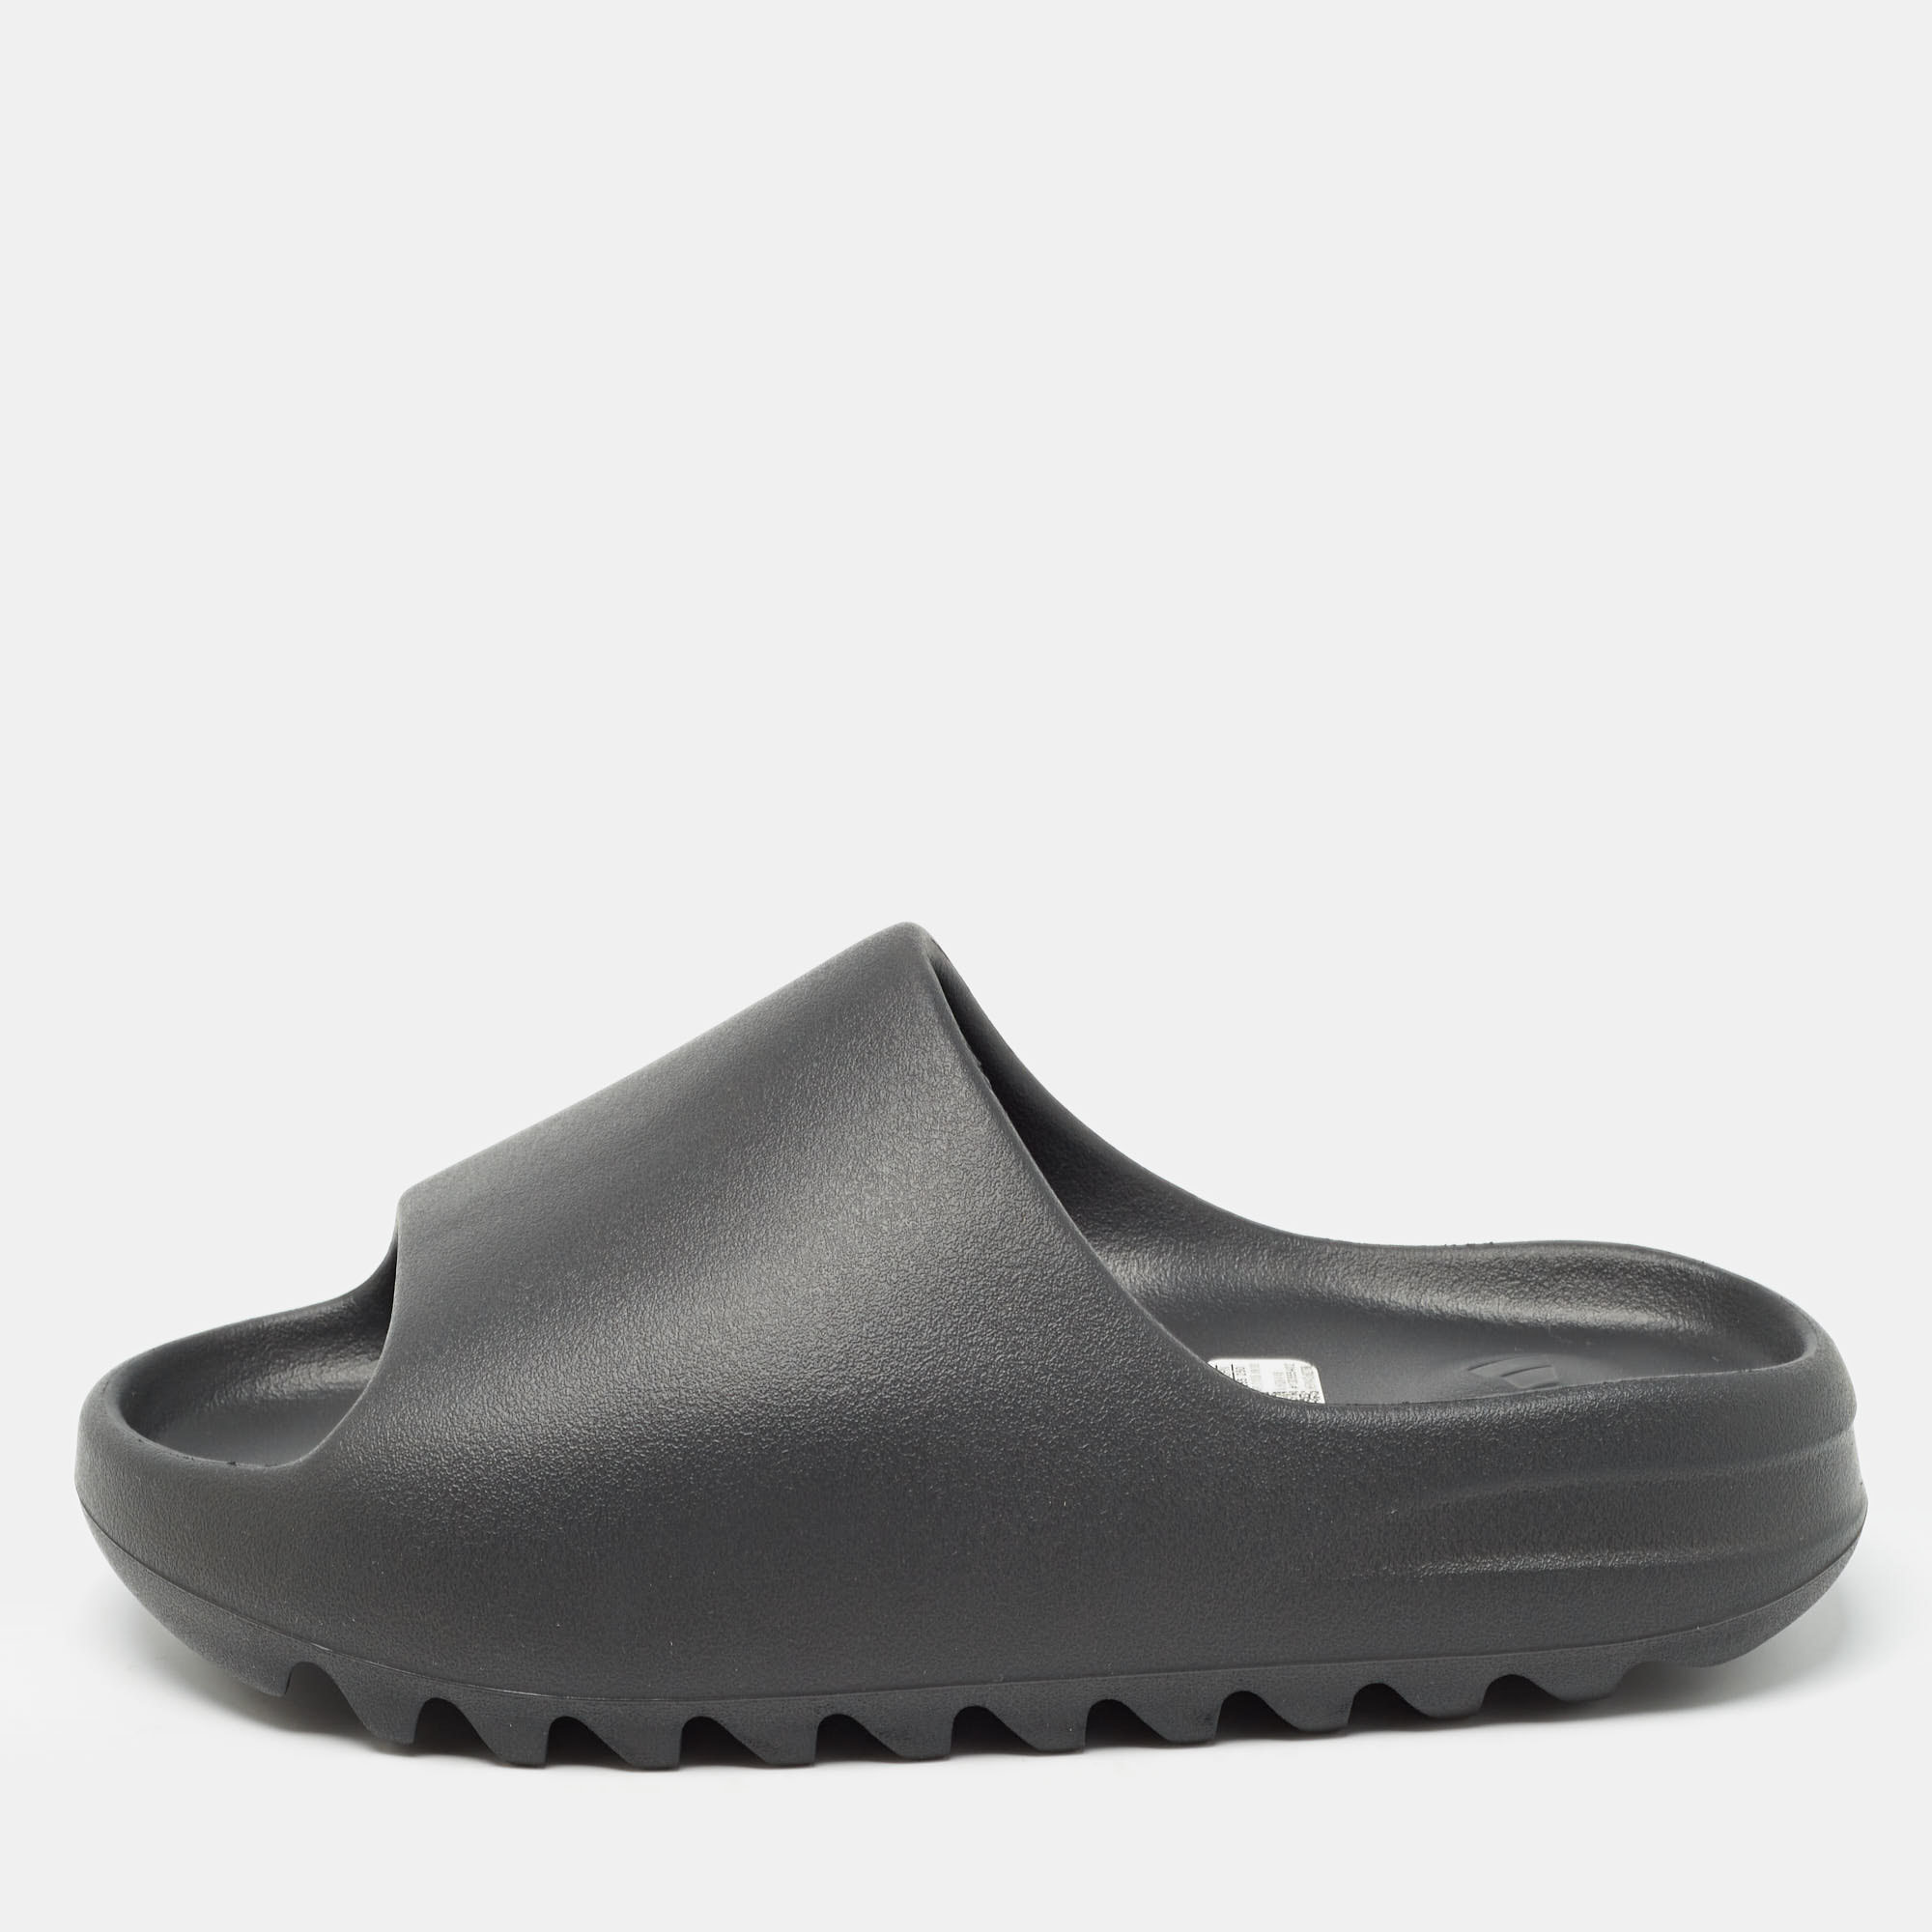 Yeezy x Adidas Black Rubber Onyx Flat Slides Size 40.5